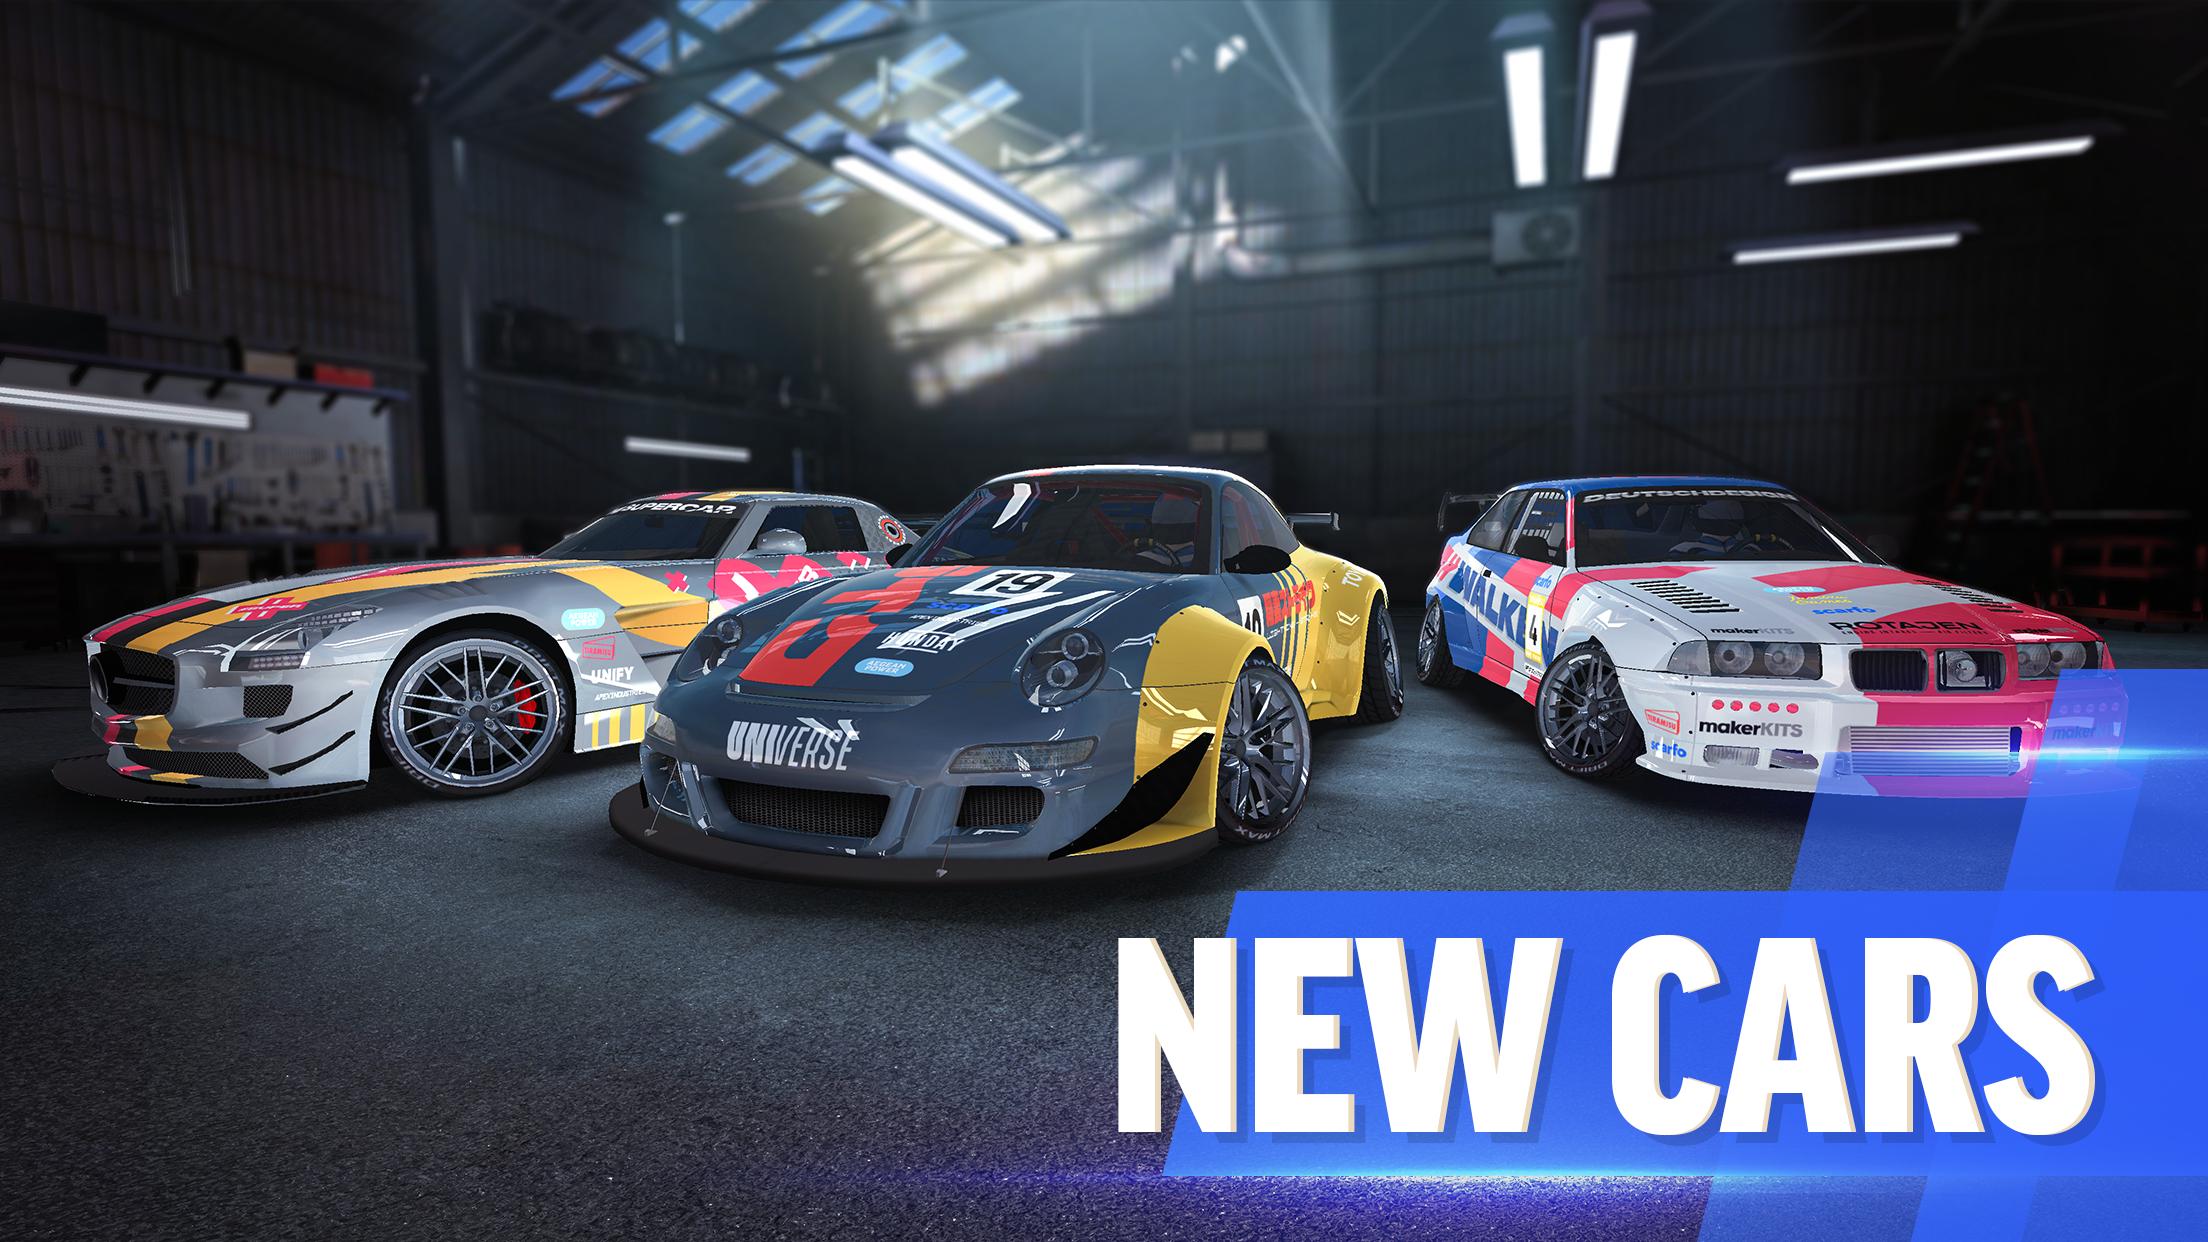 Drift Max Pro Car Drifting Game with Racing Cars 2.4.60 Screenshot 9